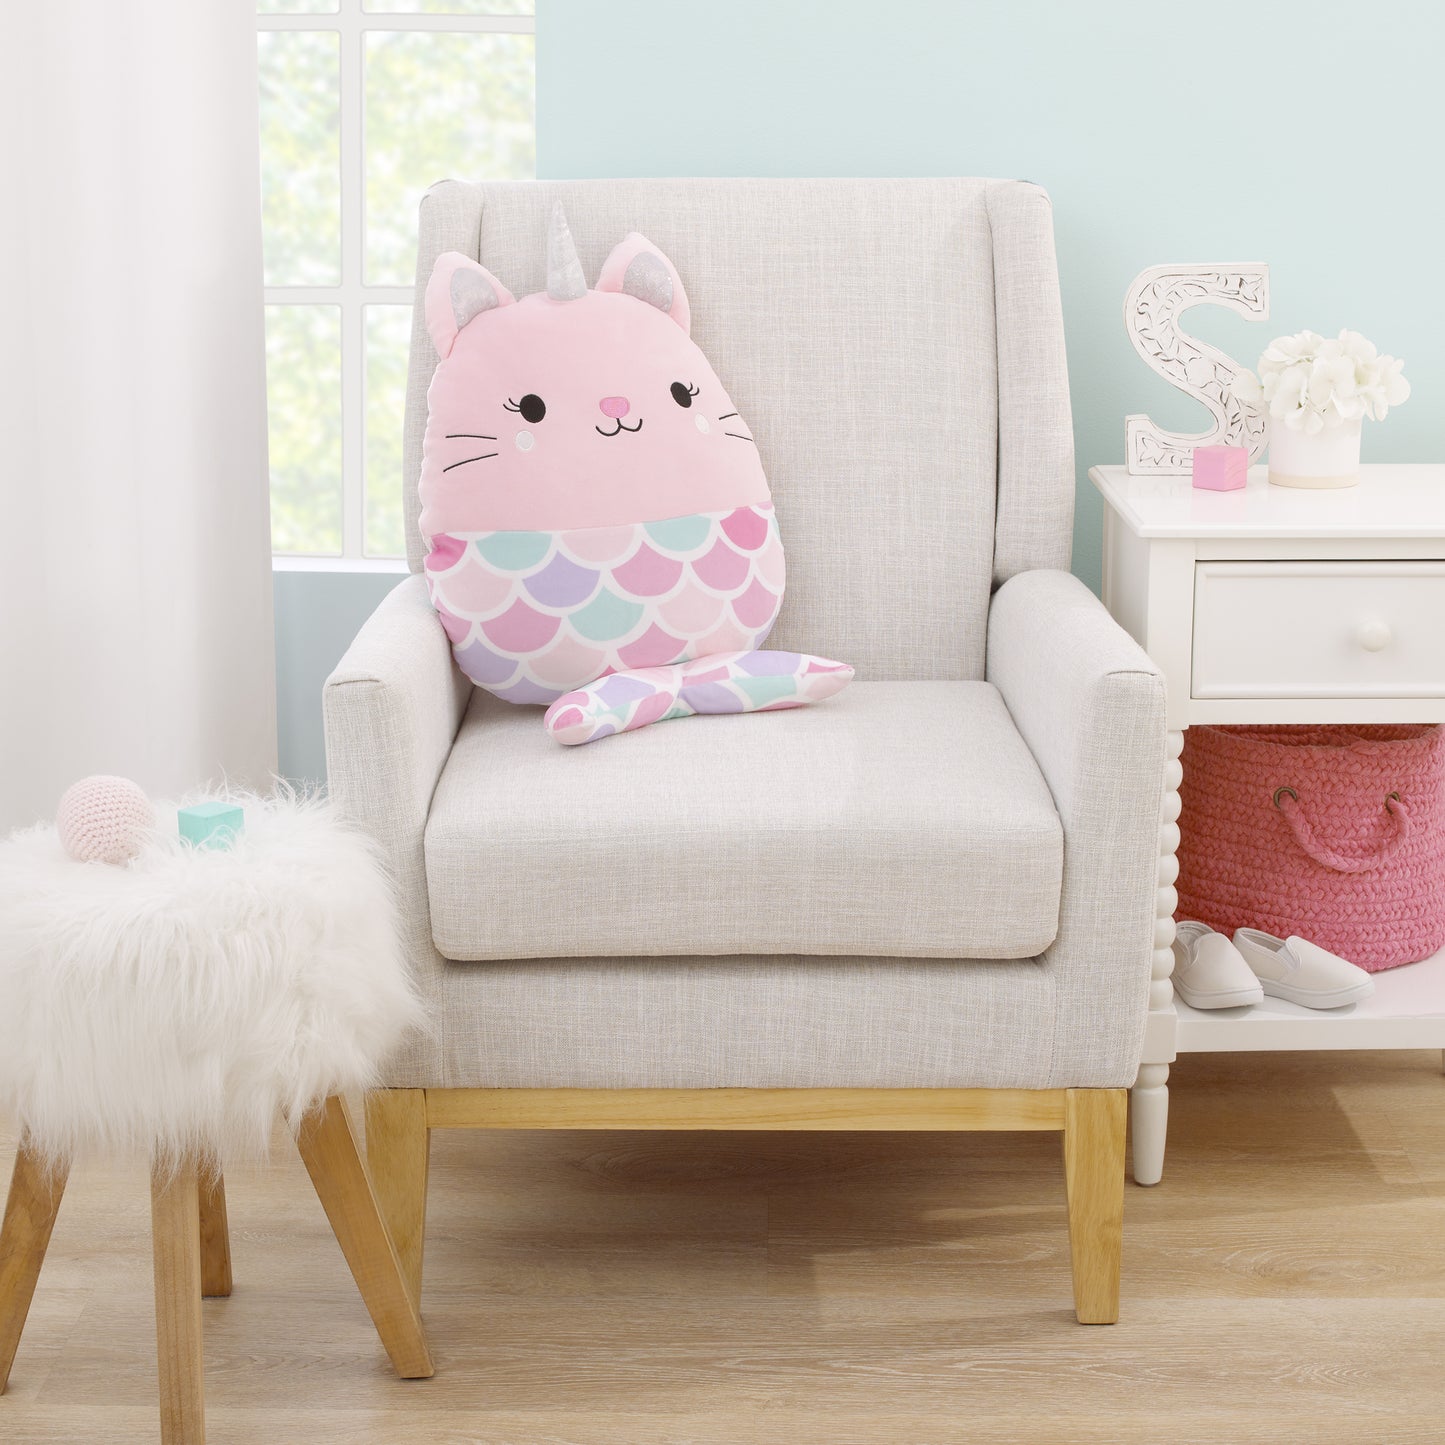 Everything Kids Mermaid Kitty Unicorn Pink, Aqua, and Lavender Squishy Toddler Pillow